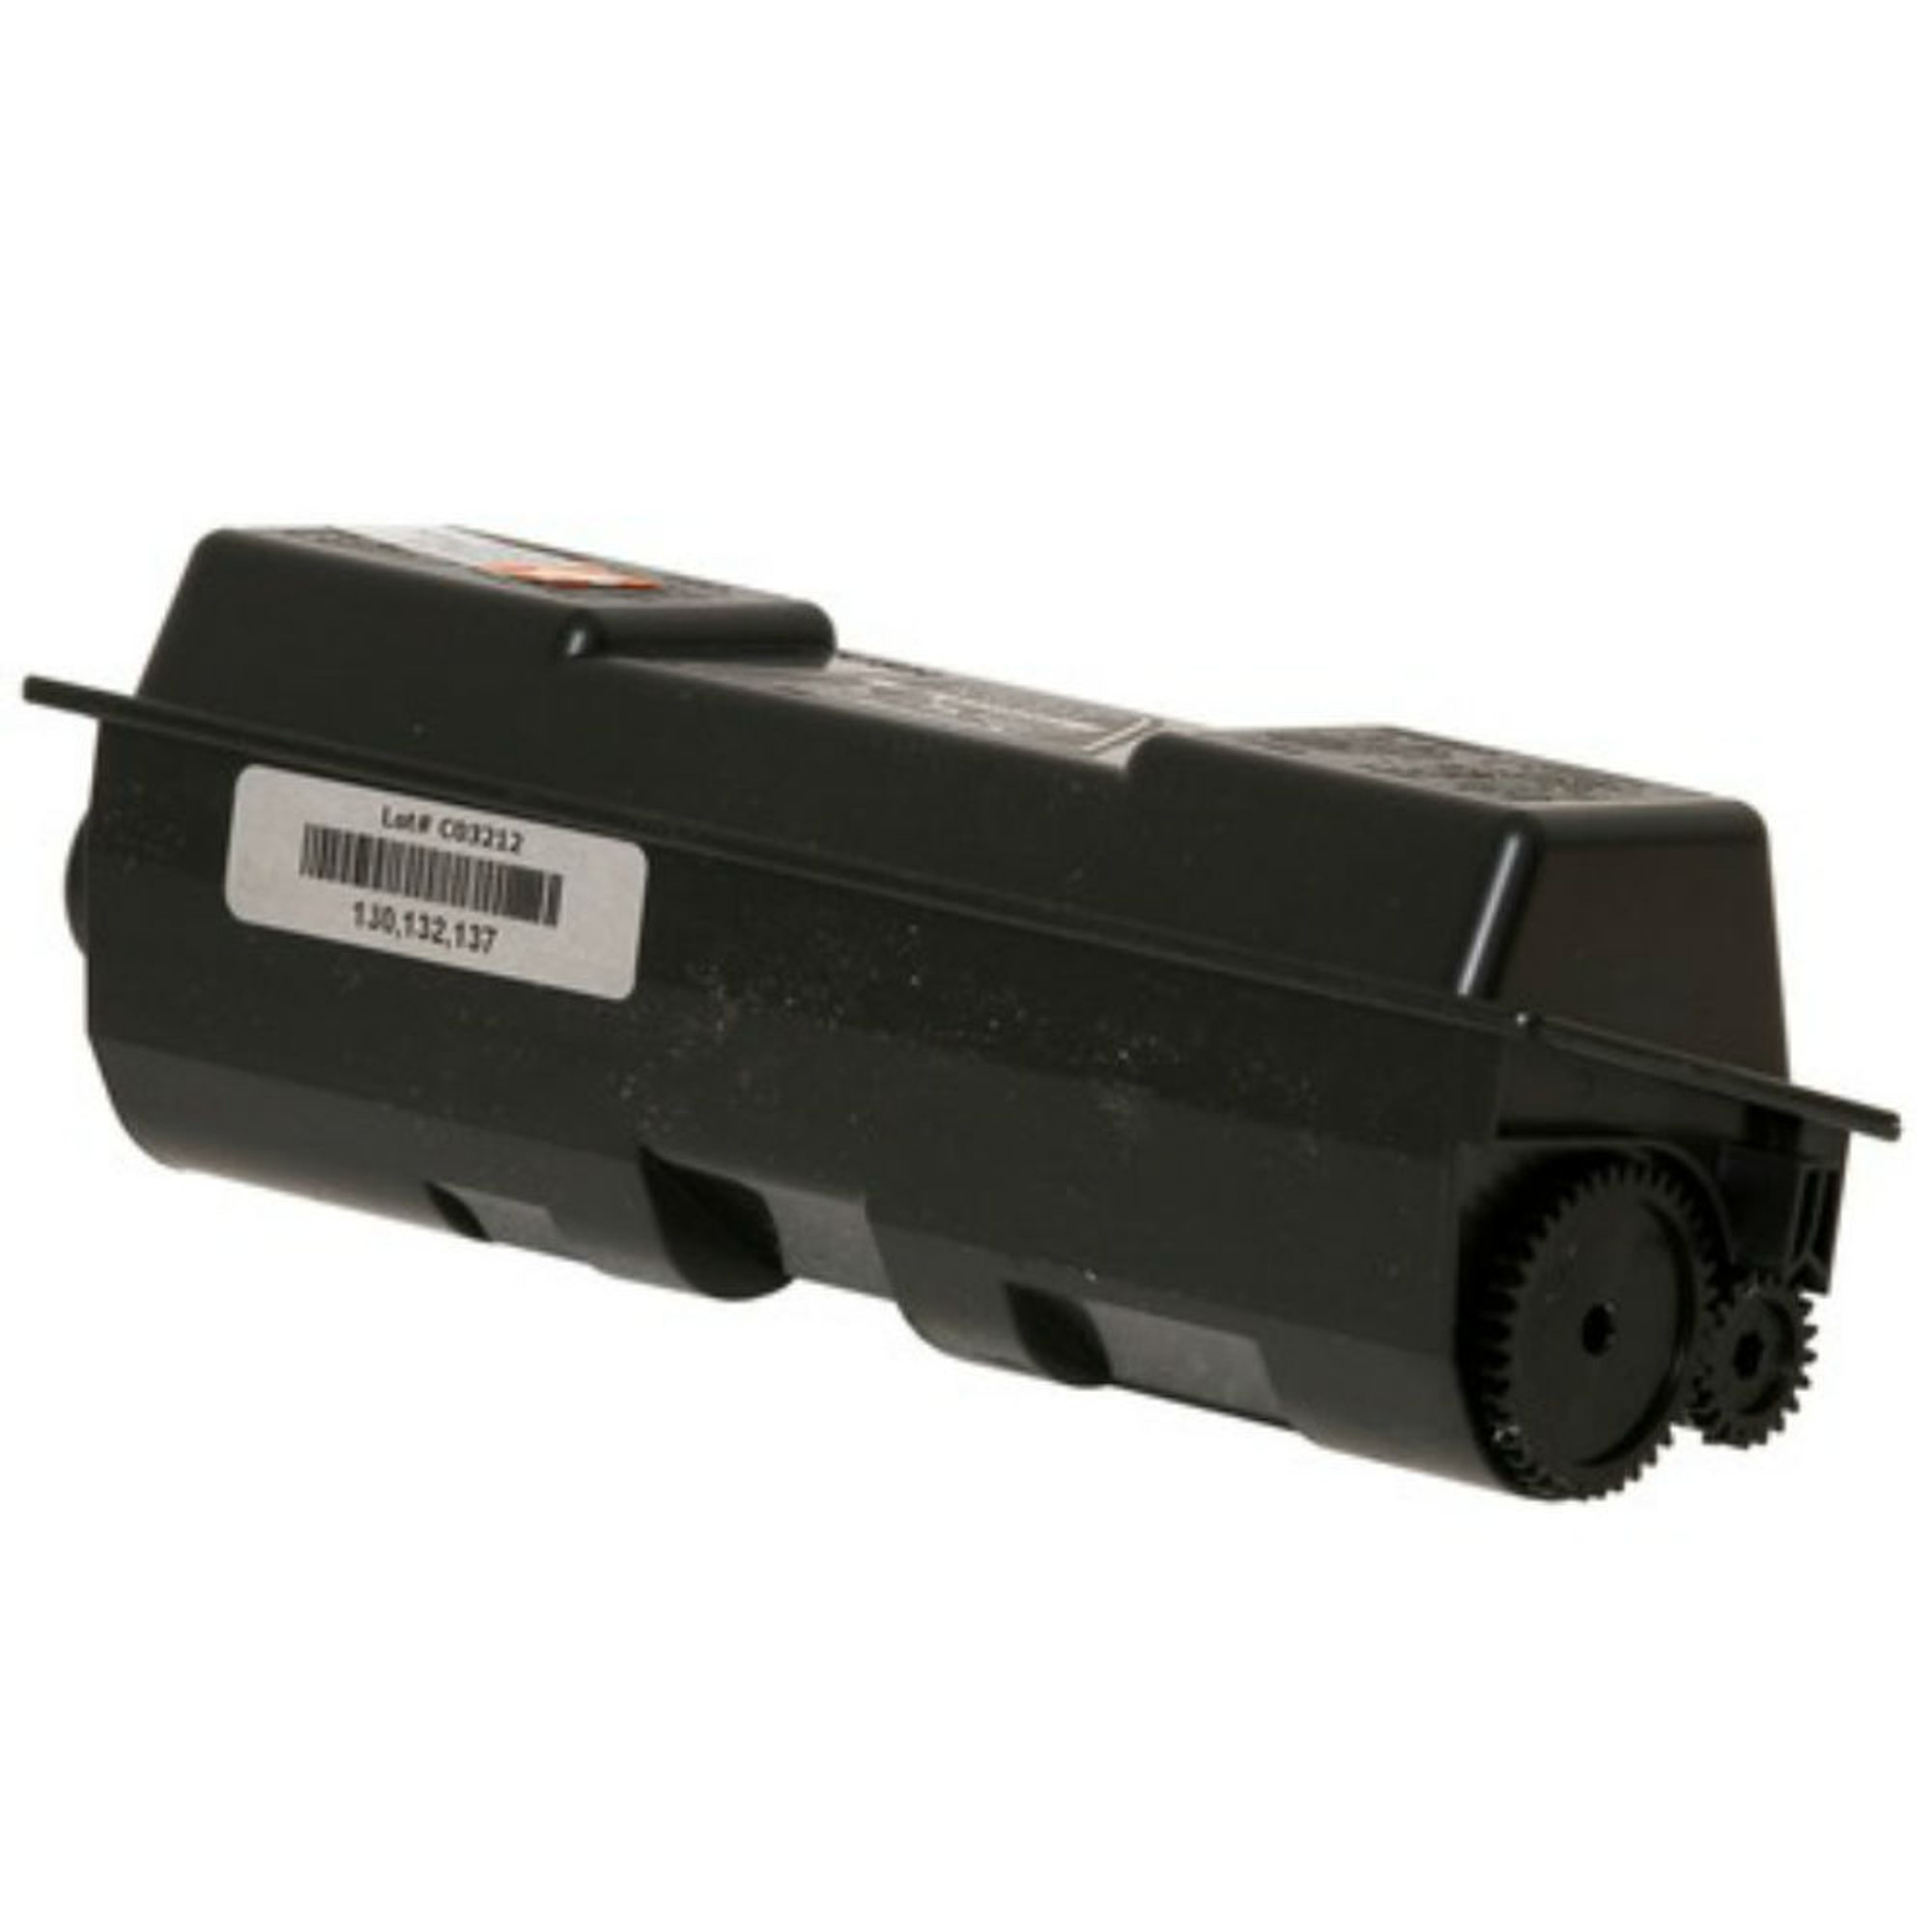 Kyocera Regular Toner for FS-1100, FS-1300D, FS-1350DN, FS-1028MFP, FS-1128MFP,  KM-2810, KM-2820 Laser Printer